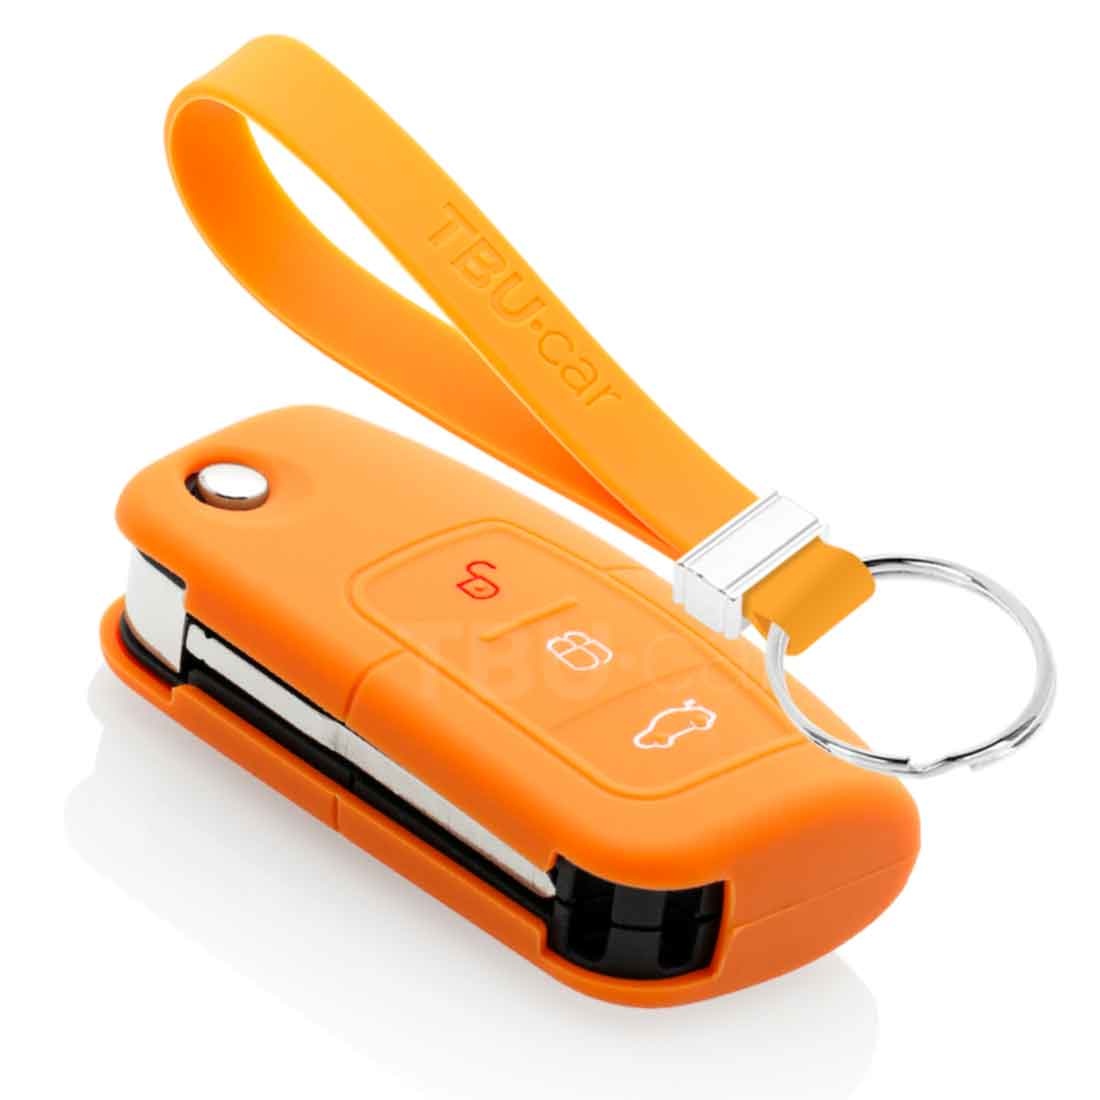 TBU car TBU car Autoschlüssel Hülle kompatibel mit Ford 3 Tasten - Schutzhülle aus Silikon - Auto Schlüsselhülle Cover in Orange